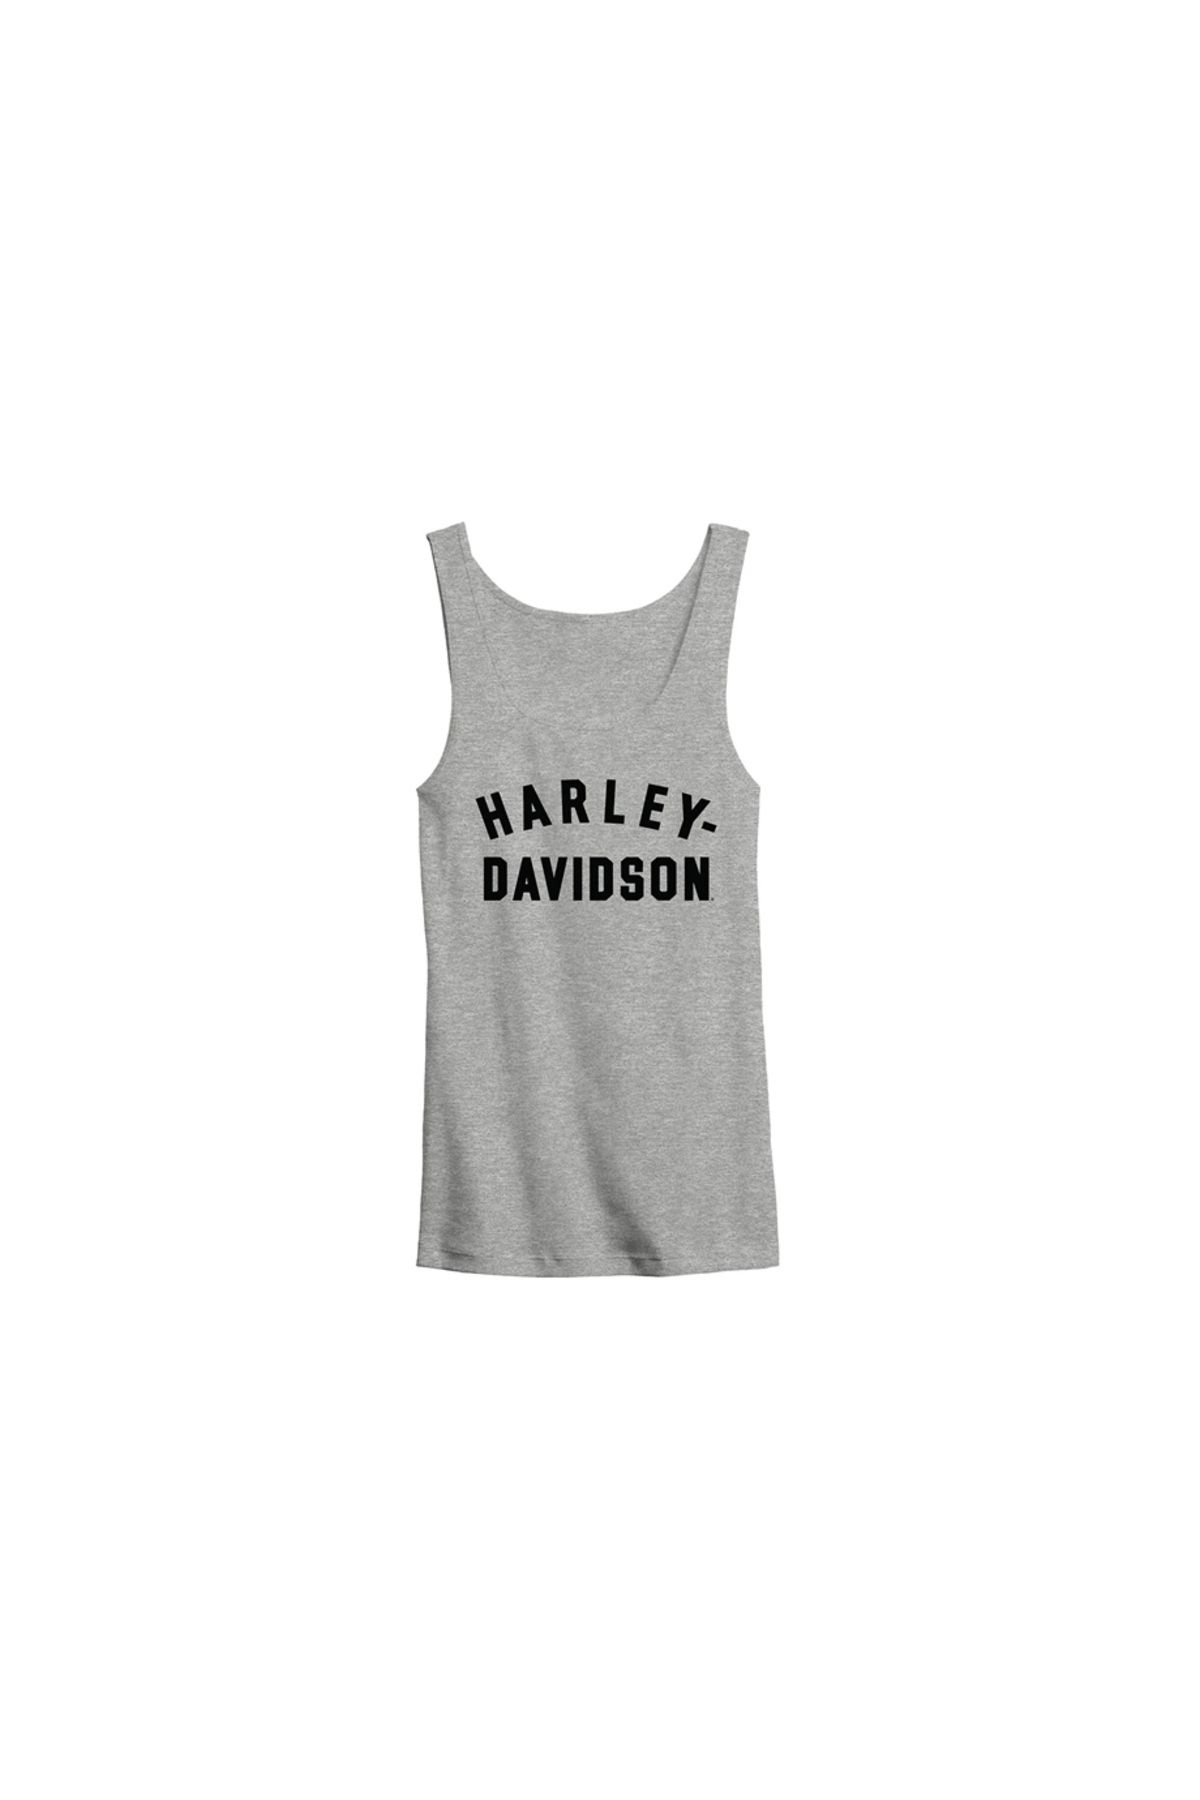 Harley Davidson Harley-davidson Women's Ultra Classic Racer Font Tank - Light Grey Heather